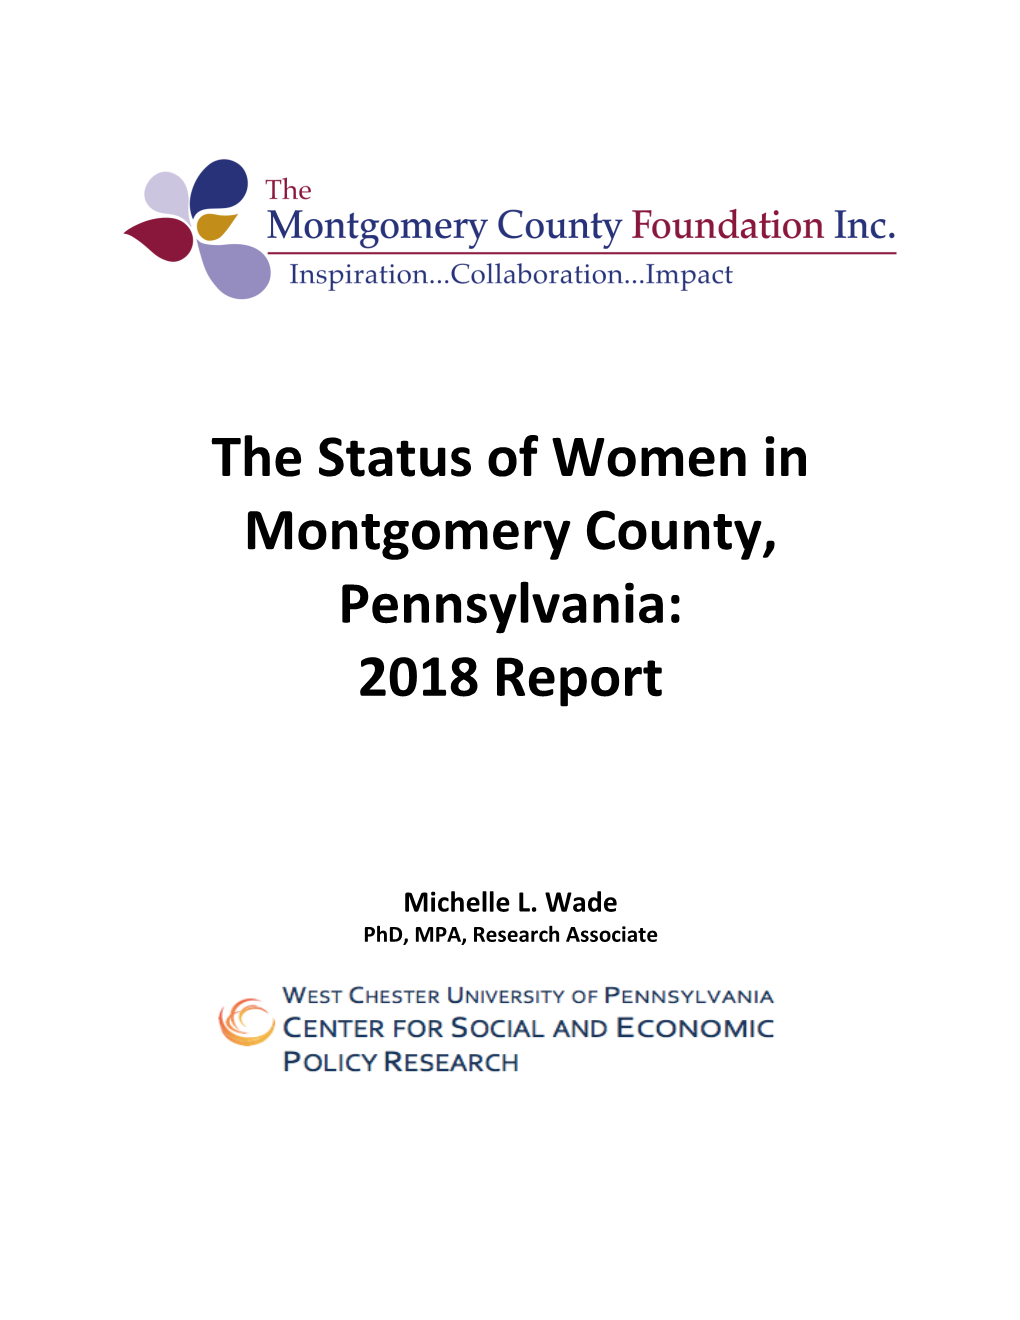 The Status of Women in Montgomery County, Pennsylvania: 2018 Report